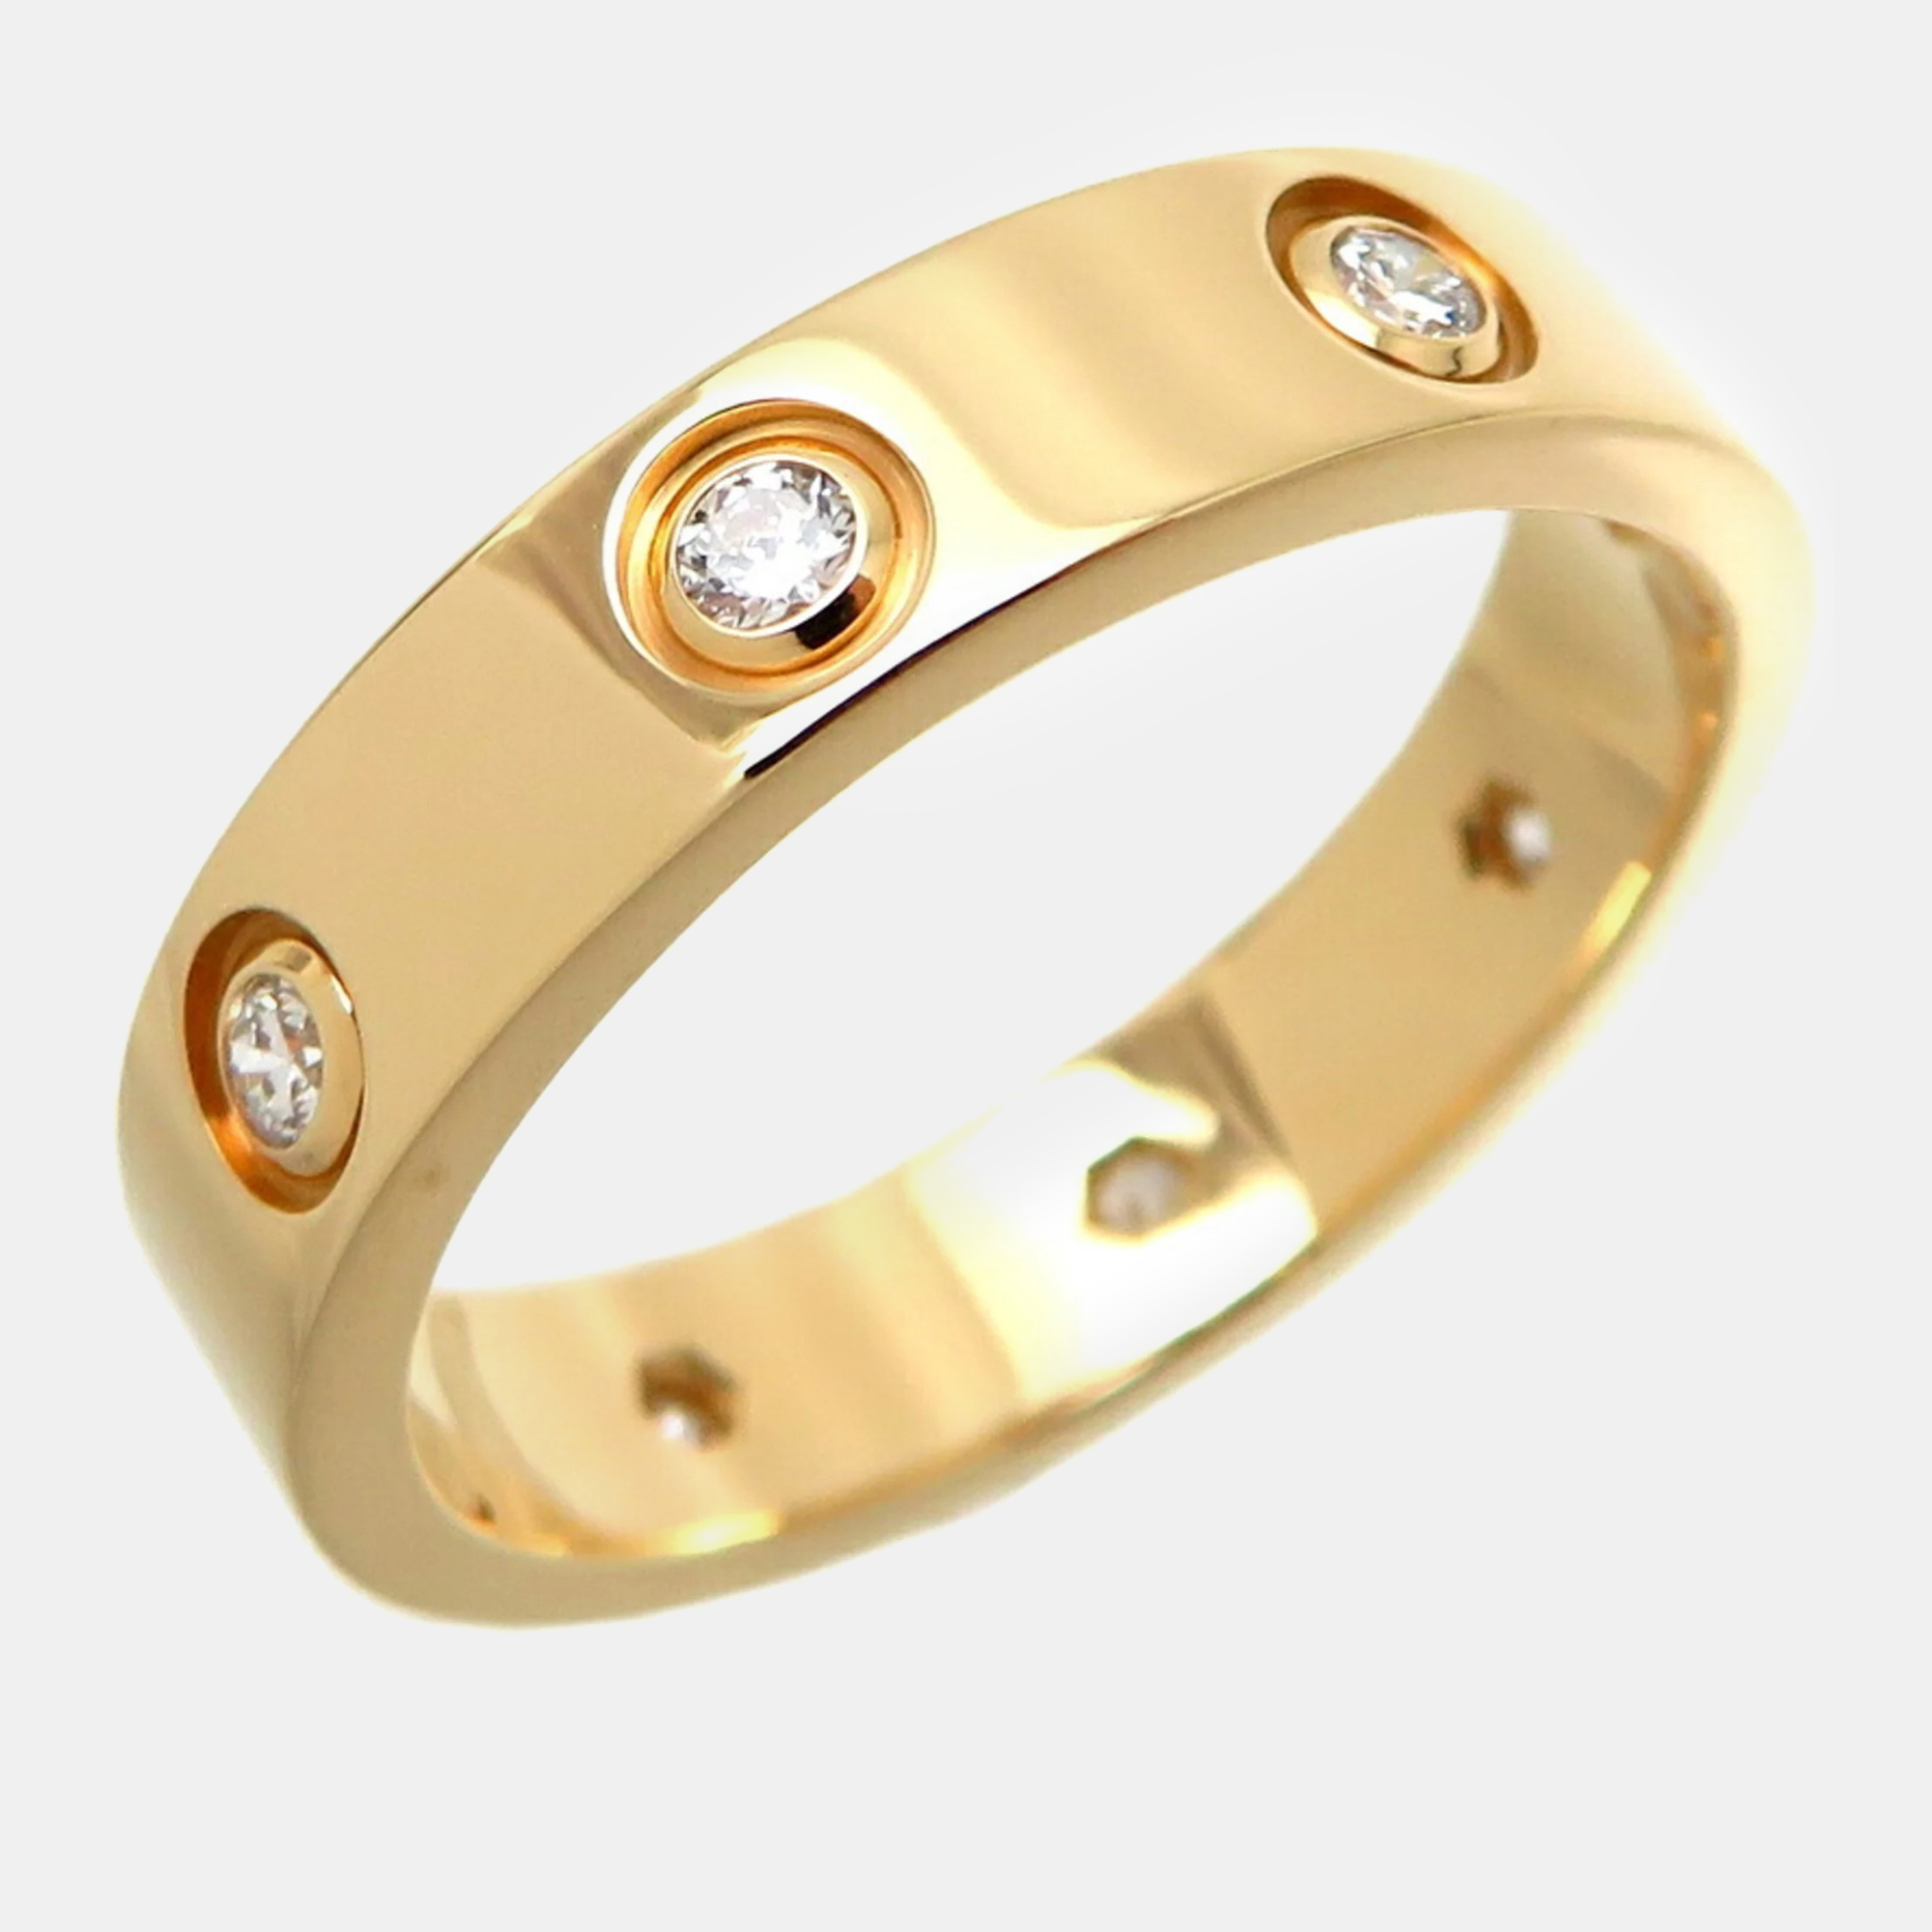 Cartier 18k yellow gold and 8 diamond love band ring eu 50